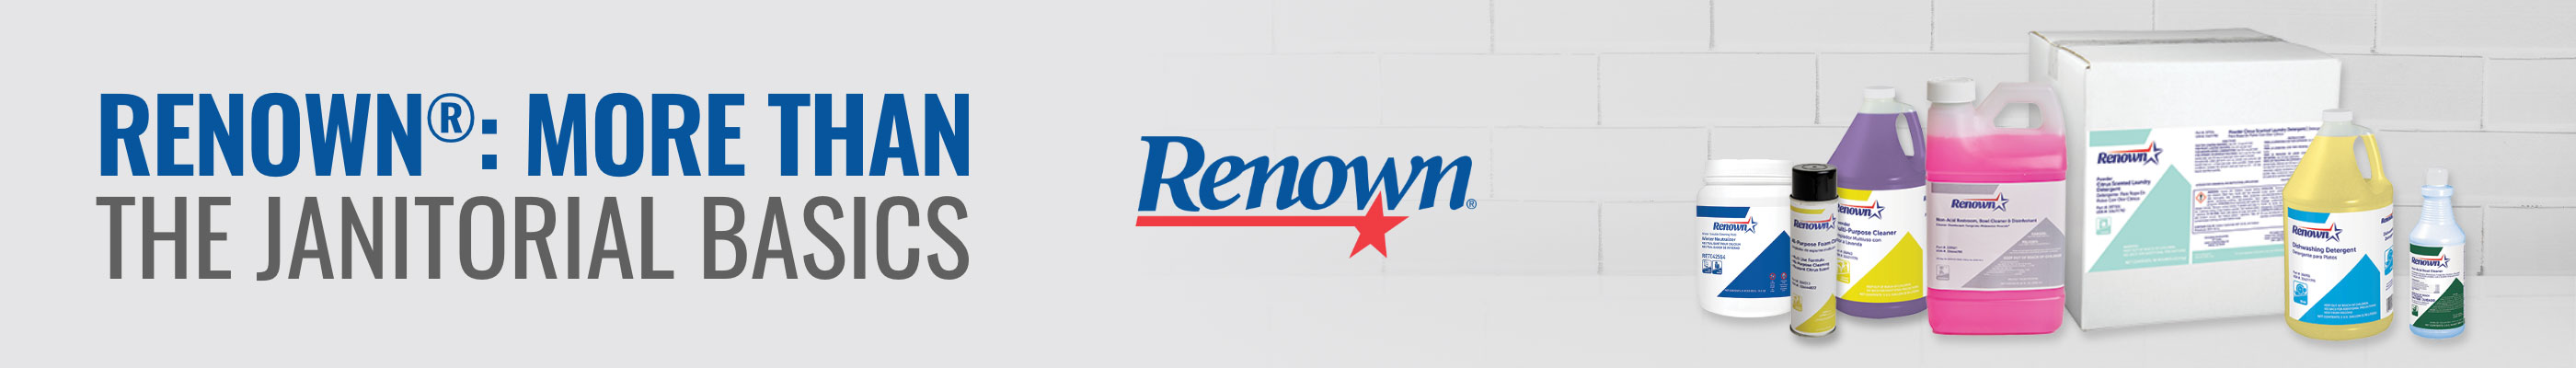 Renown Brand Page Hero - Desktop